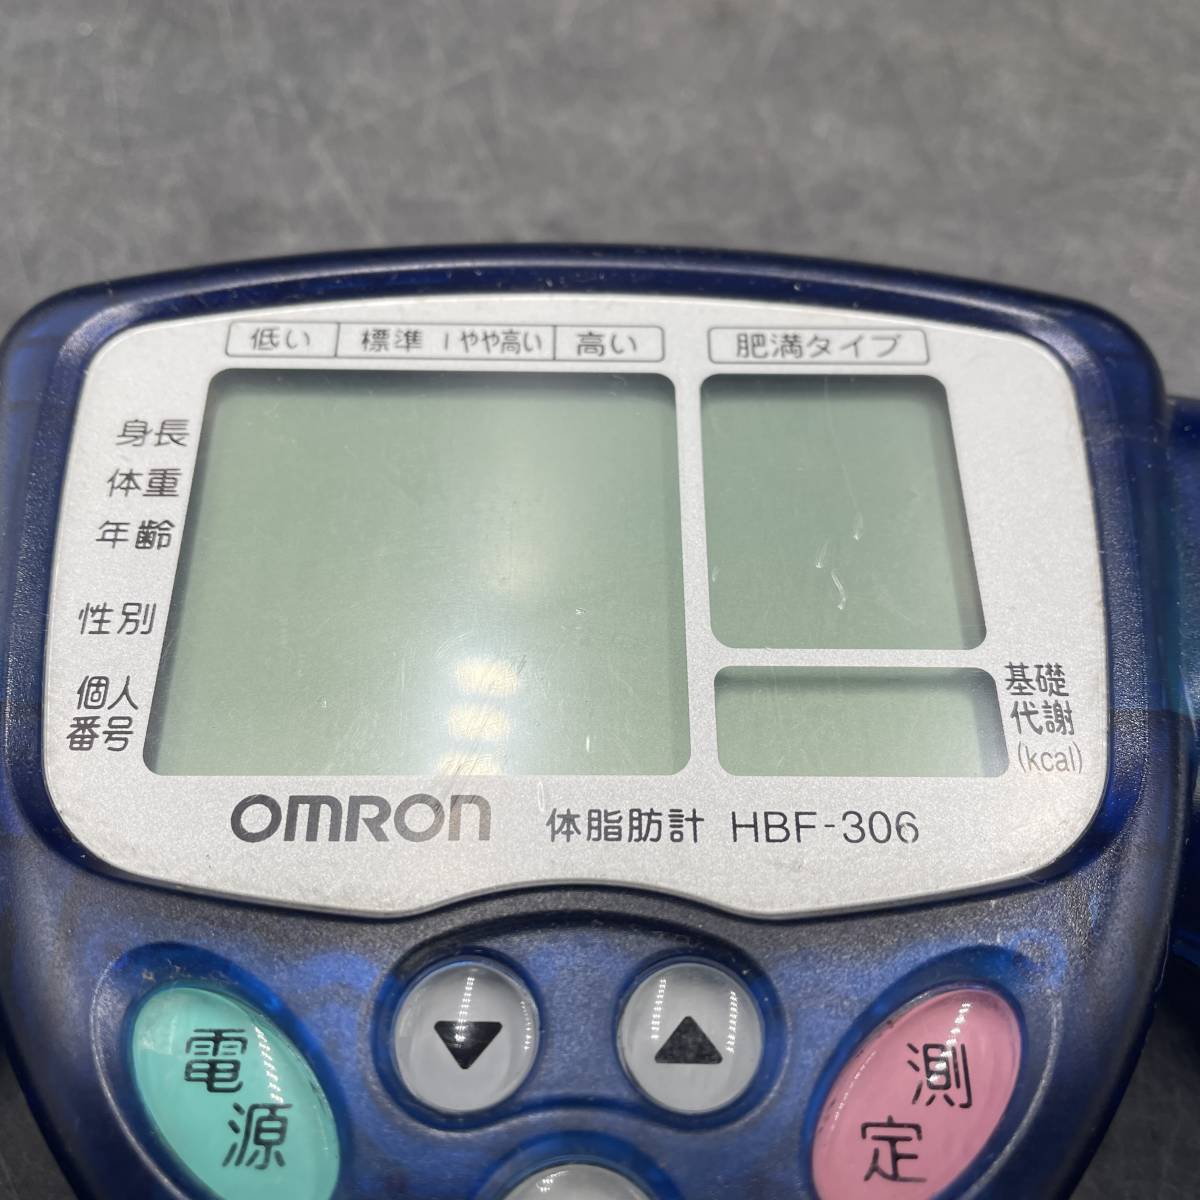 OMRON/ Omron body fat meter health appliances [HBF-306]